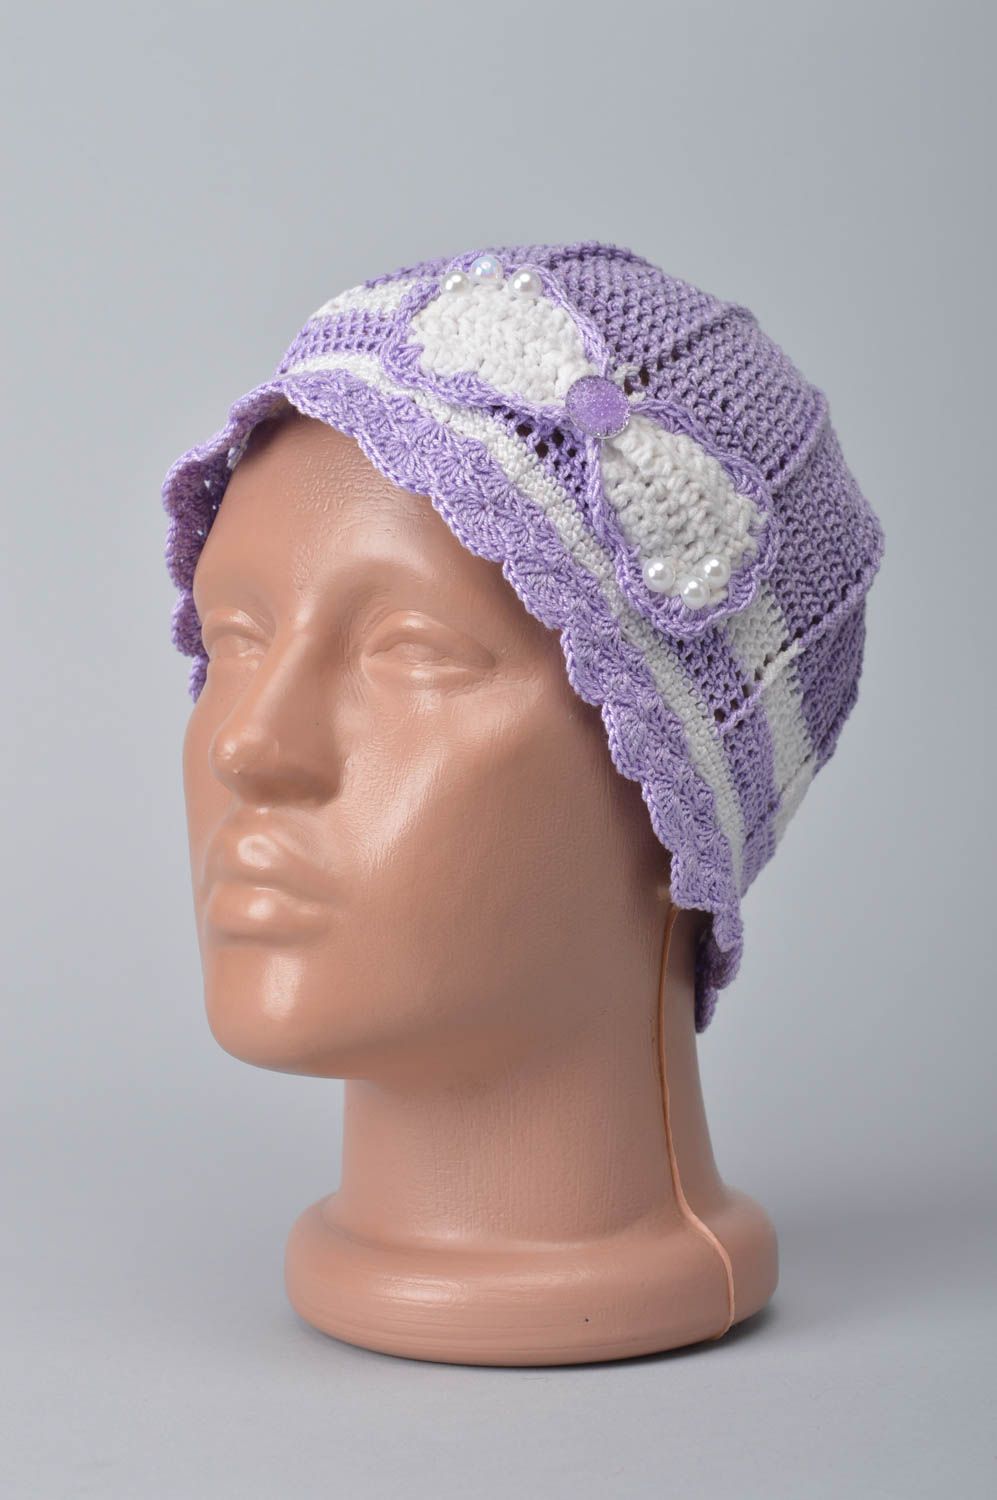 Unusual handmade crochet hat designs cute hats designer accessories for girls photo 1